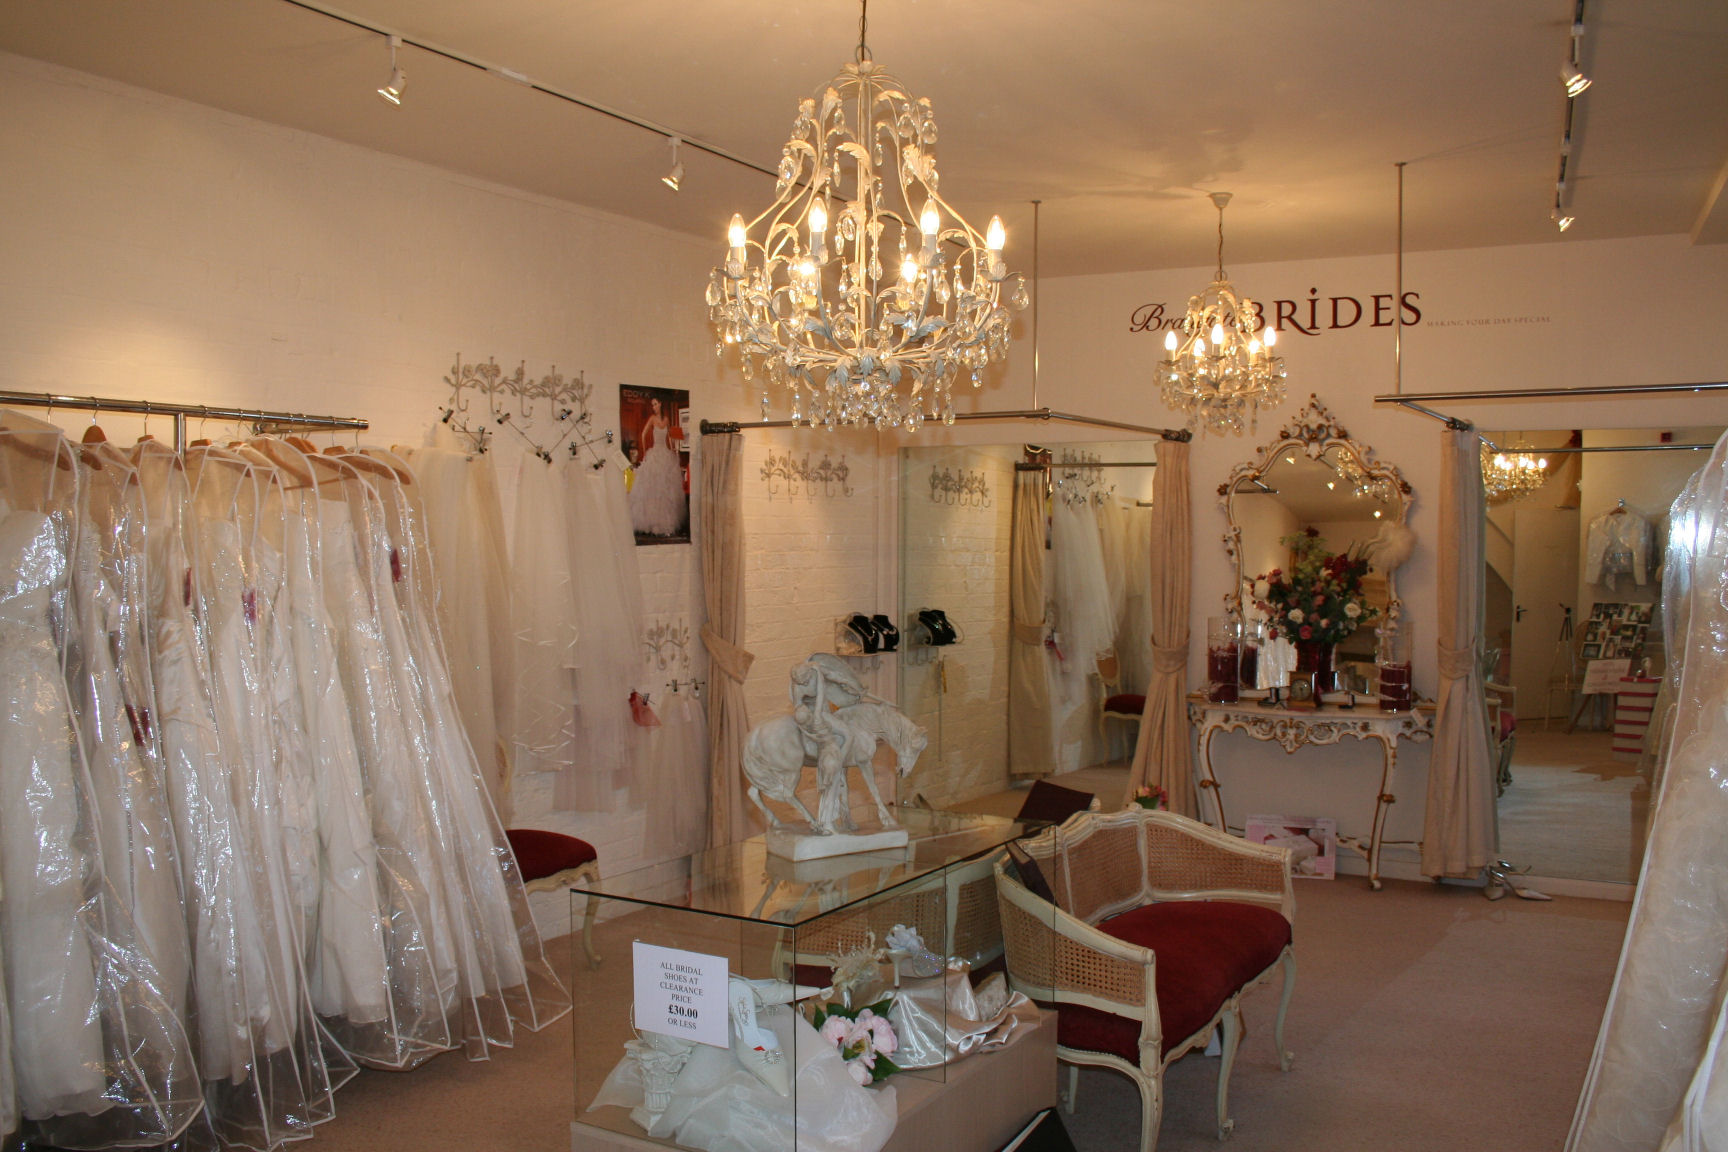 Bradgate Brides Anstey Leicester  Bridal  Shop opening 